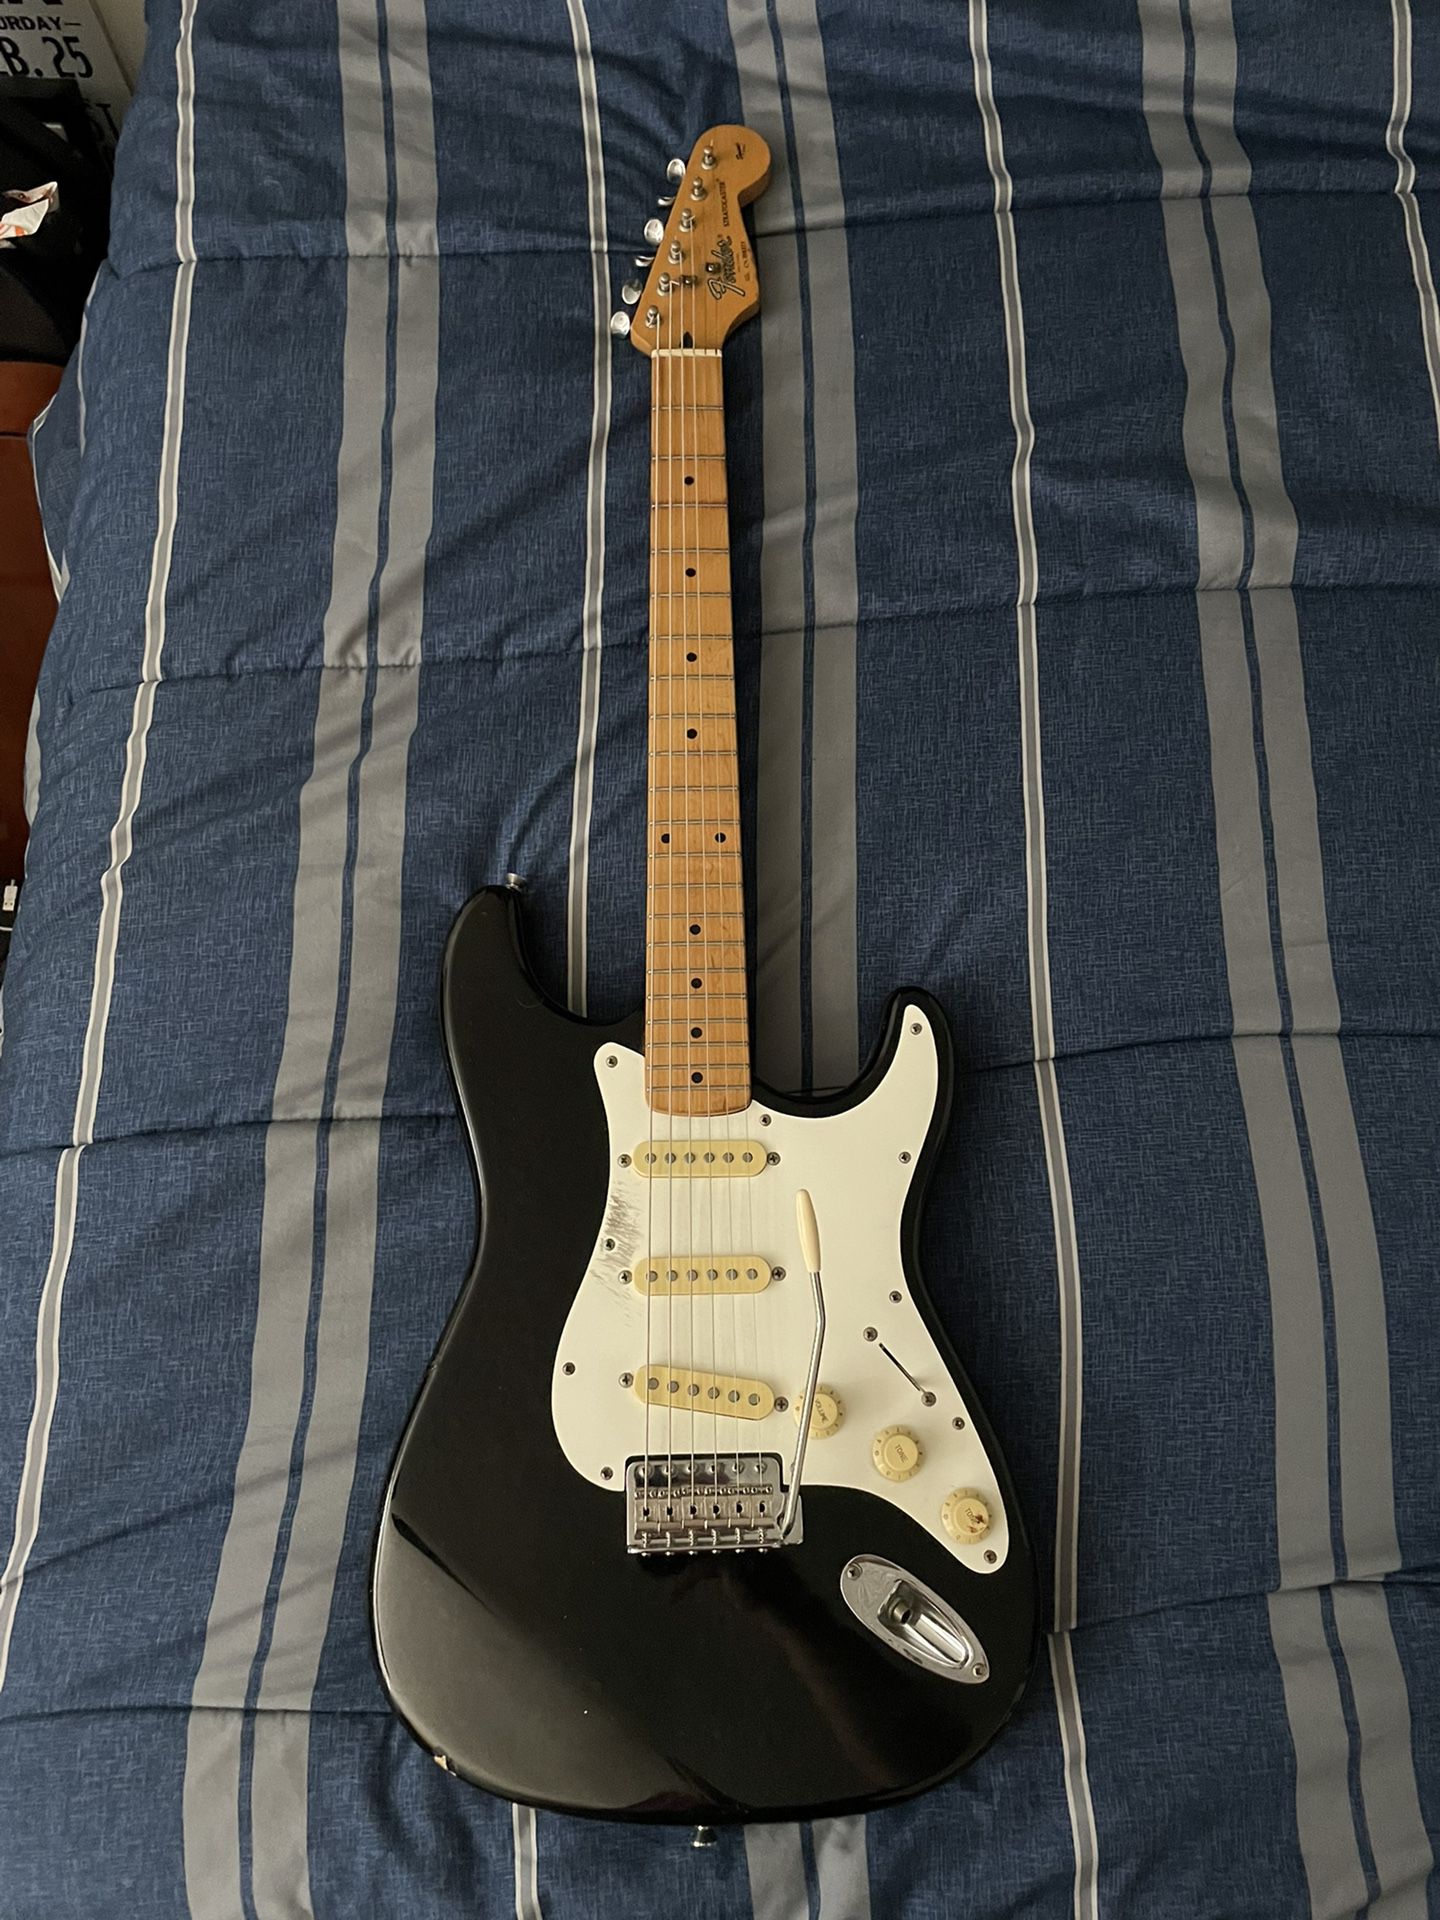 Fender Stratocaster MIK 1993 Squier Series